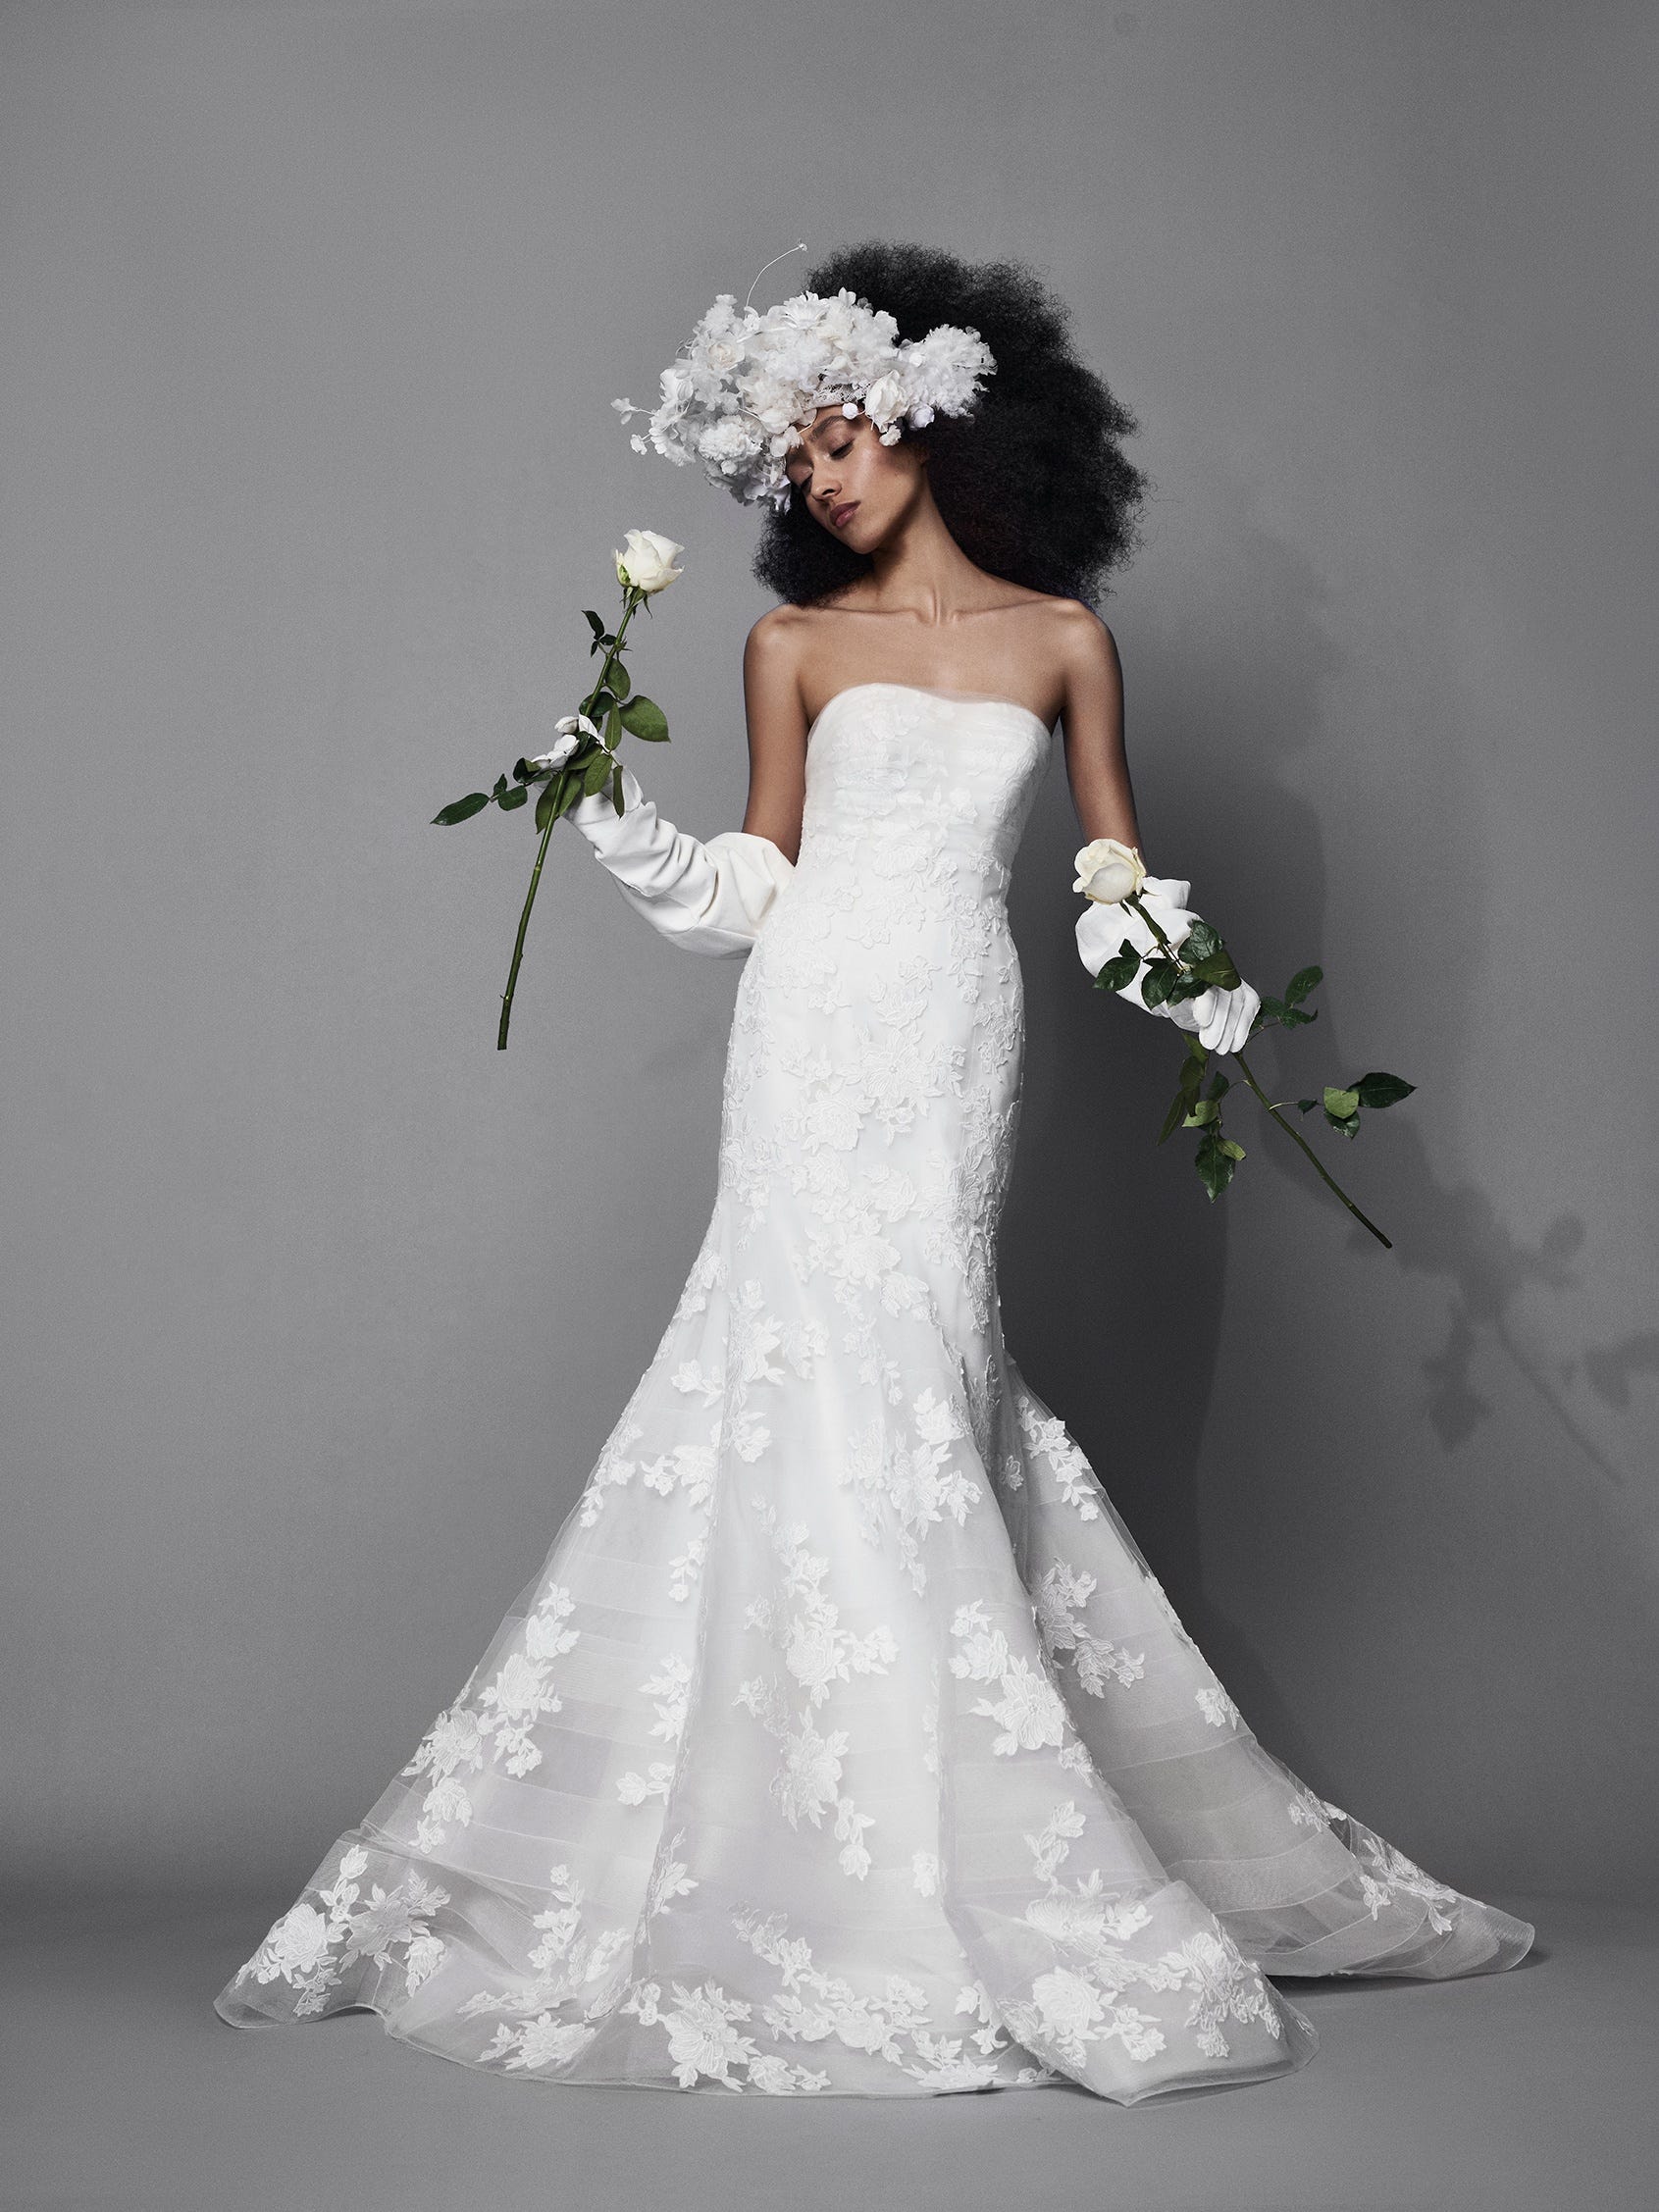 5 Chic Wedding Dresses Under $1,500 - Love Inc. Mag